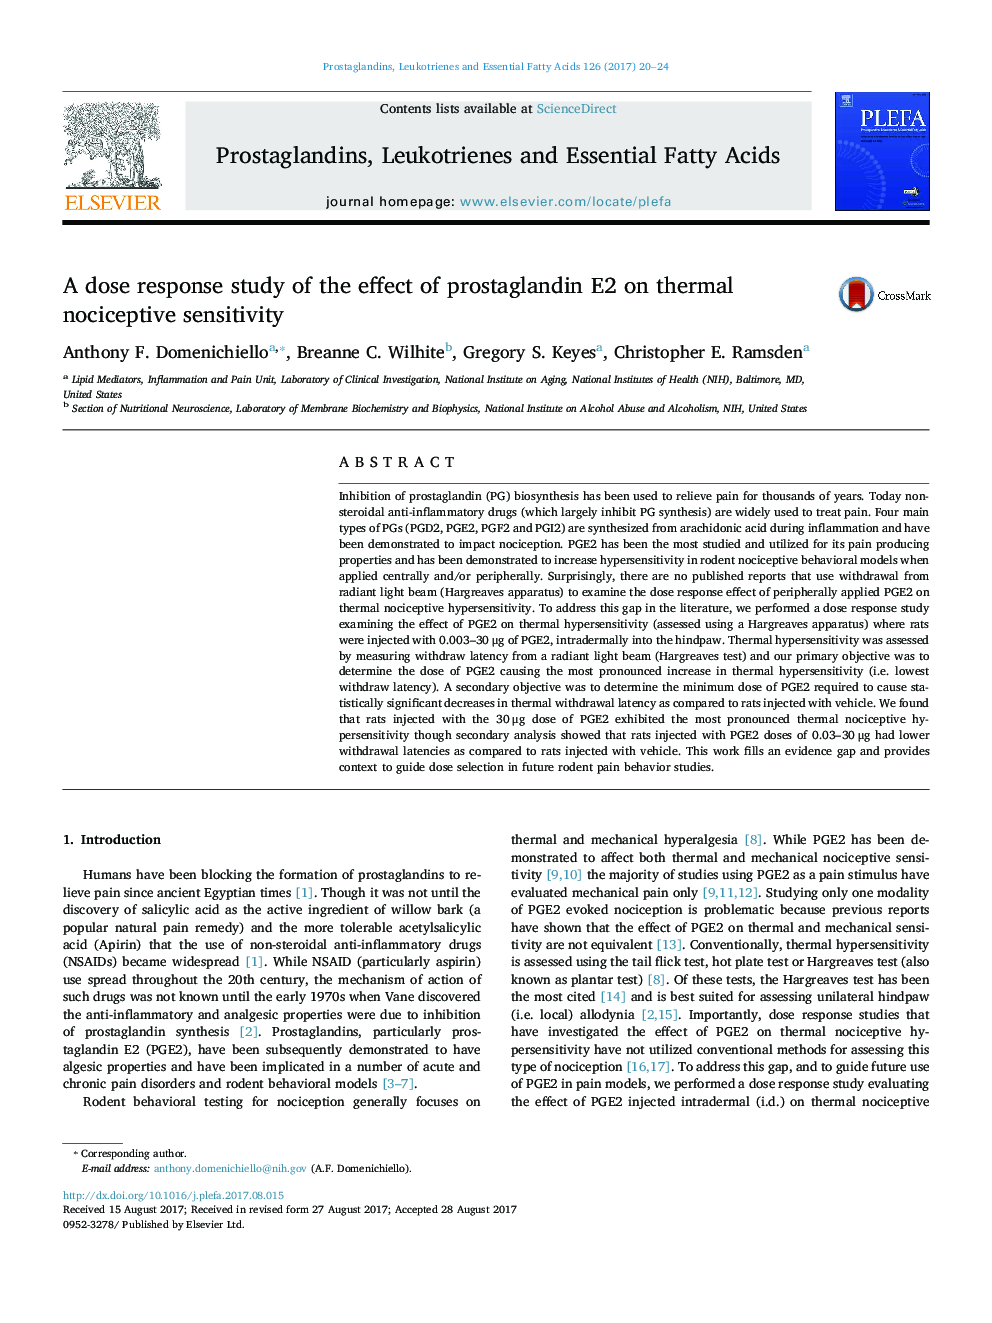 A dose response study of the effect of prostaglandin E2 on thermal nociceptive sensitivity